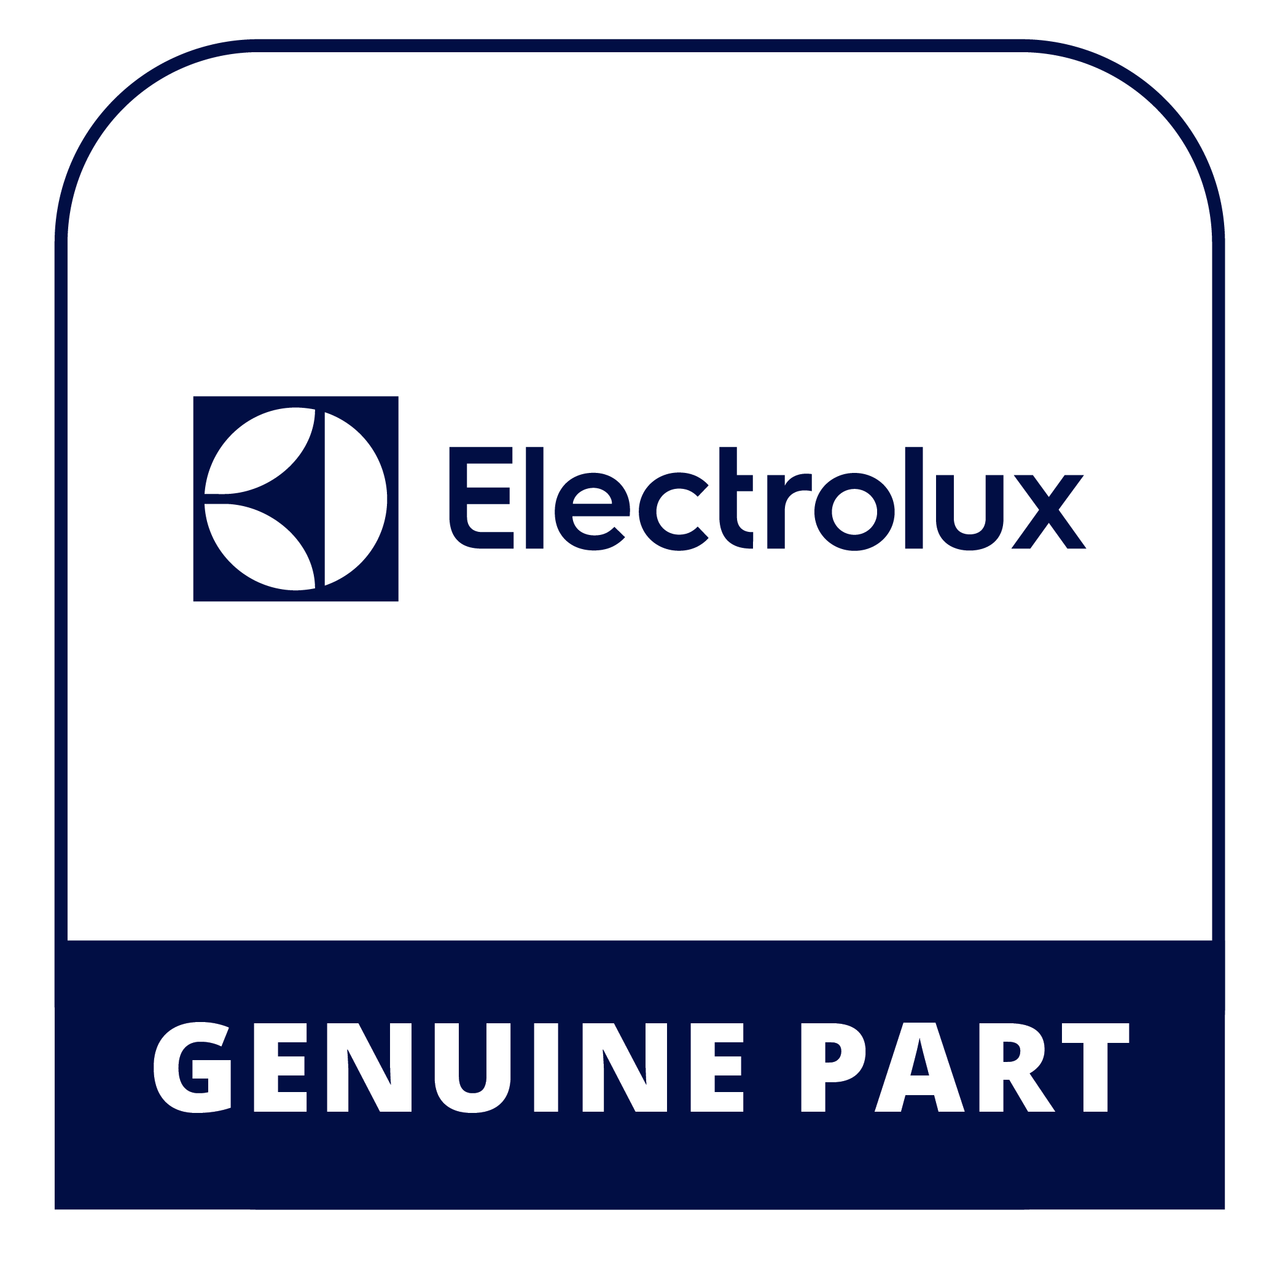 Frigidaire - Electrolux 316602600 Shield - Genuine Electrolux Part